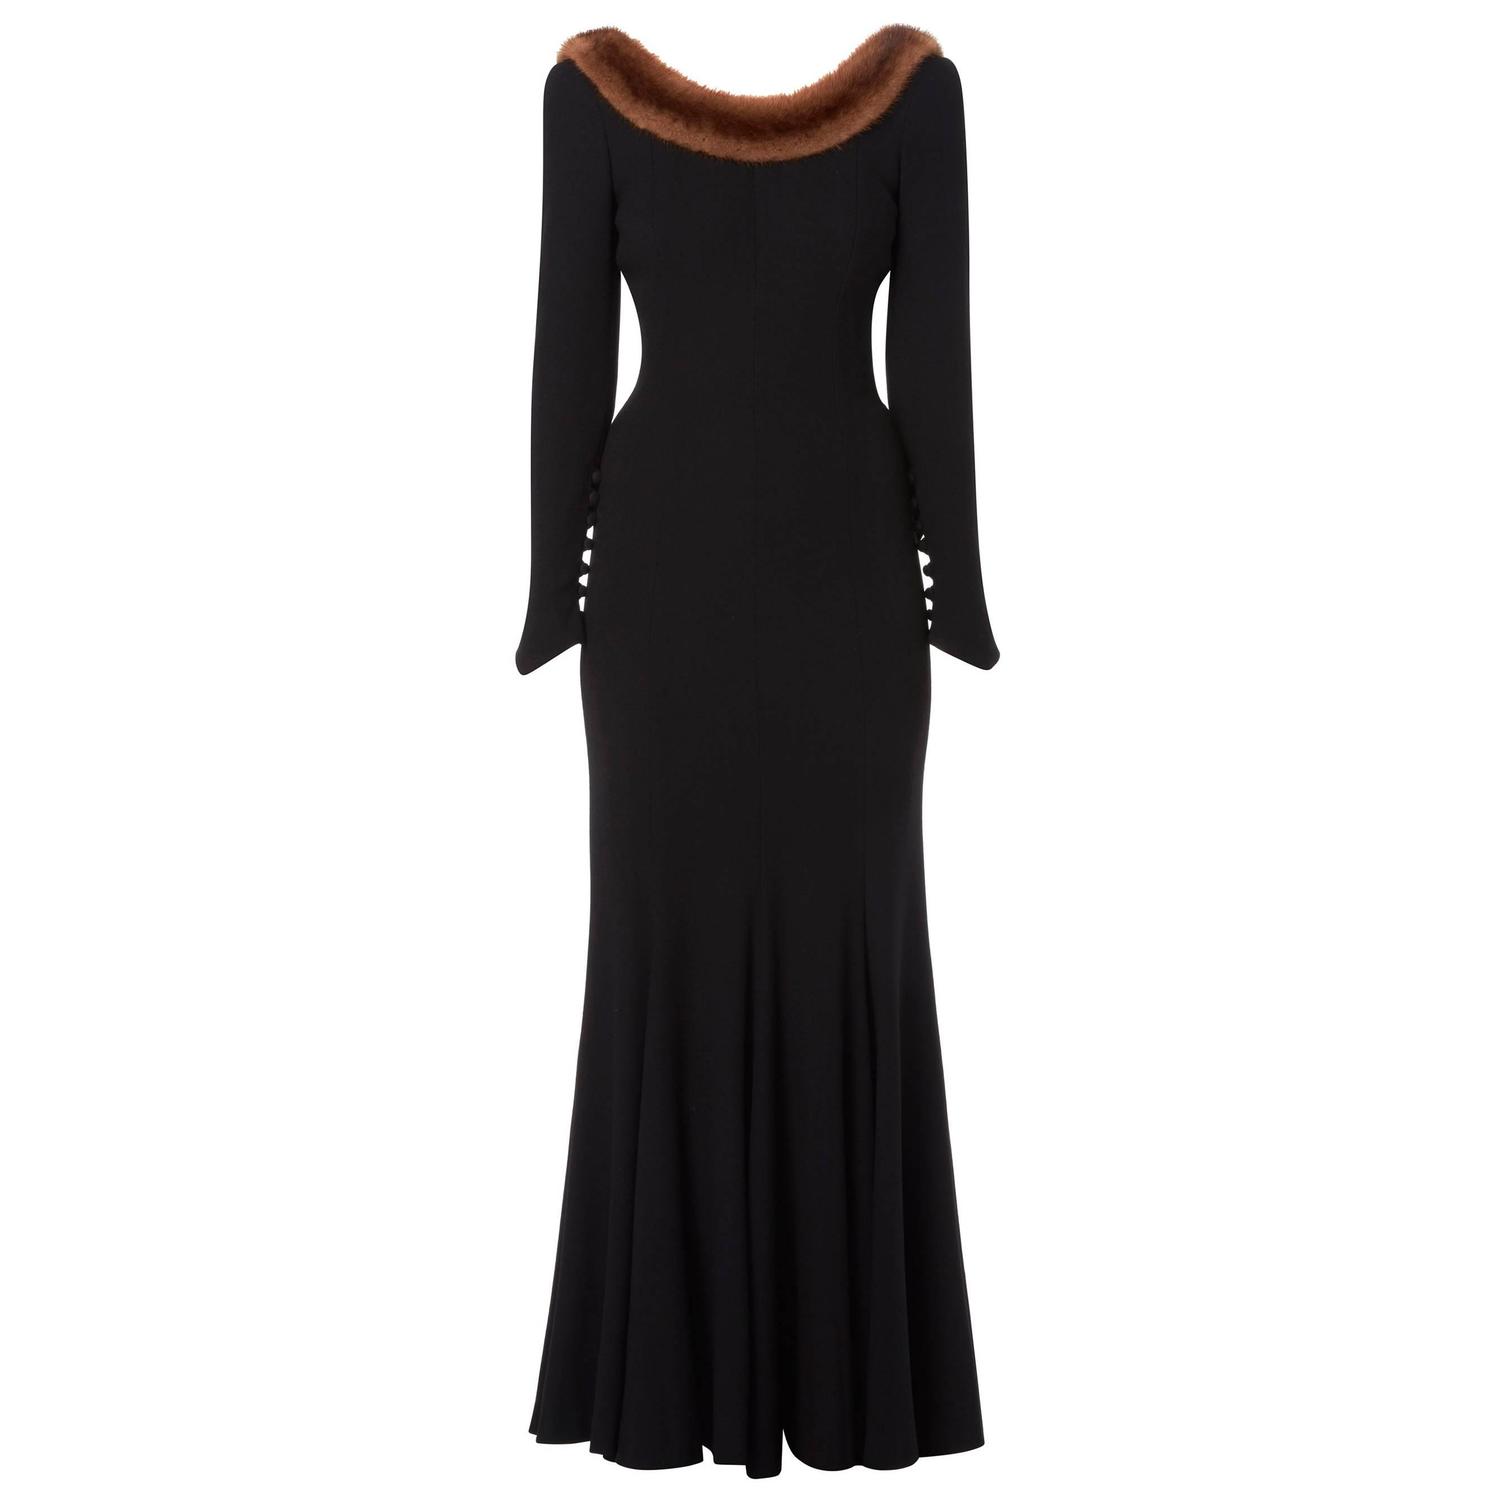 Rena Lange black gown, circa 1980 For Sale at 1stdibs